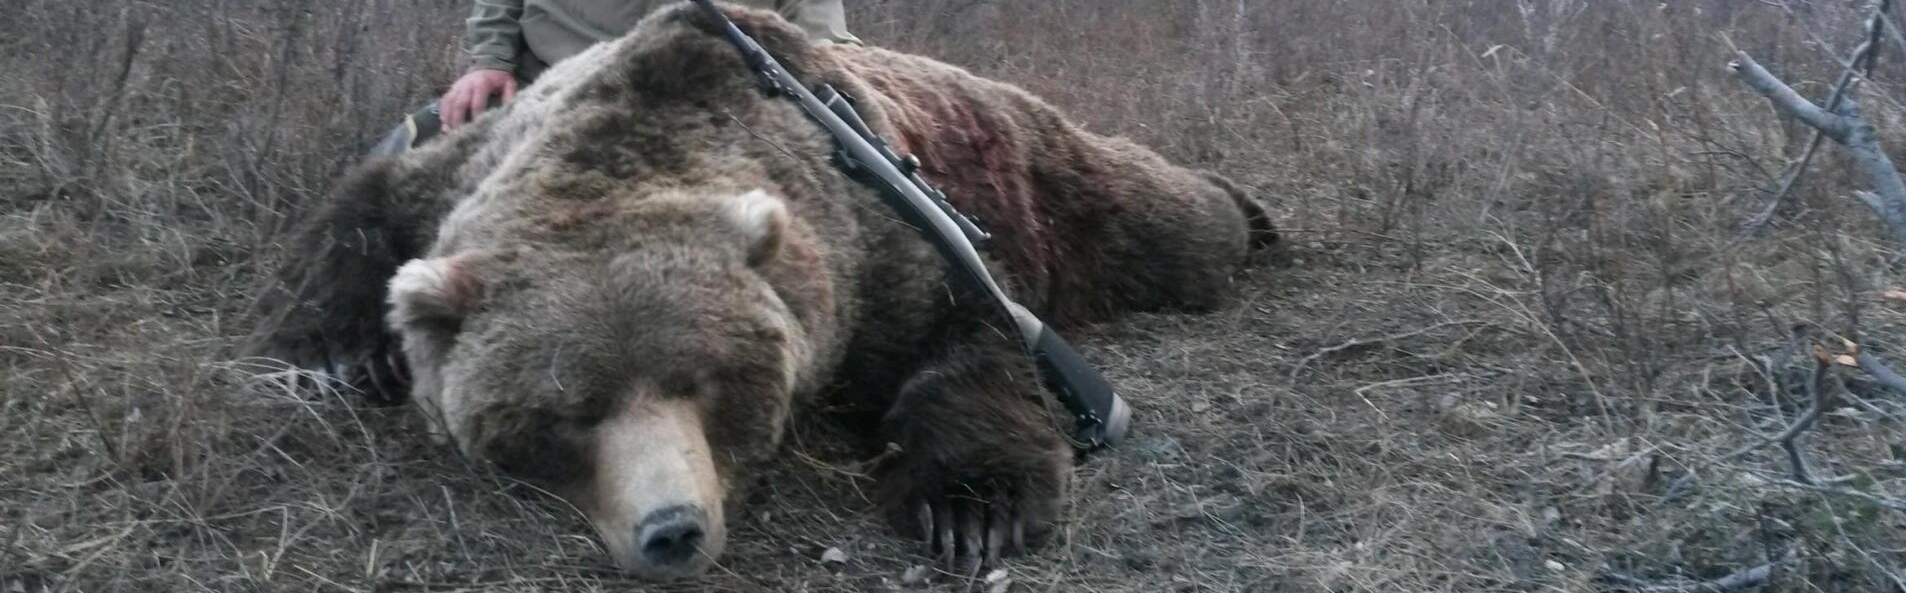 Alaska Grizzly Bear Hunting, Grizzly bear hunt